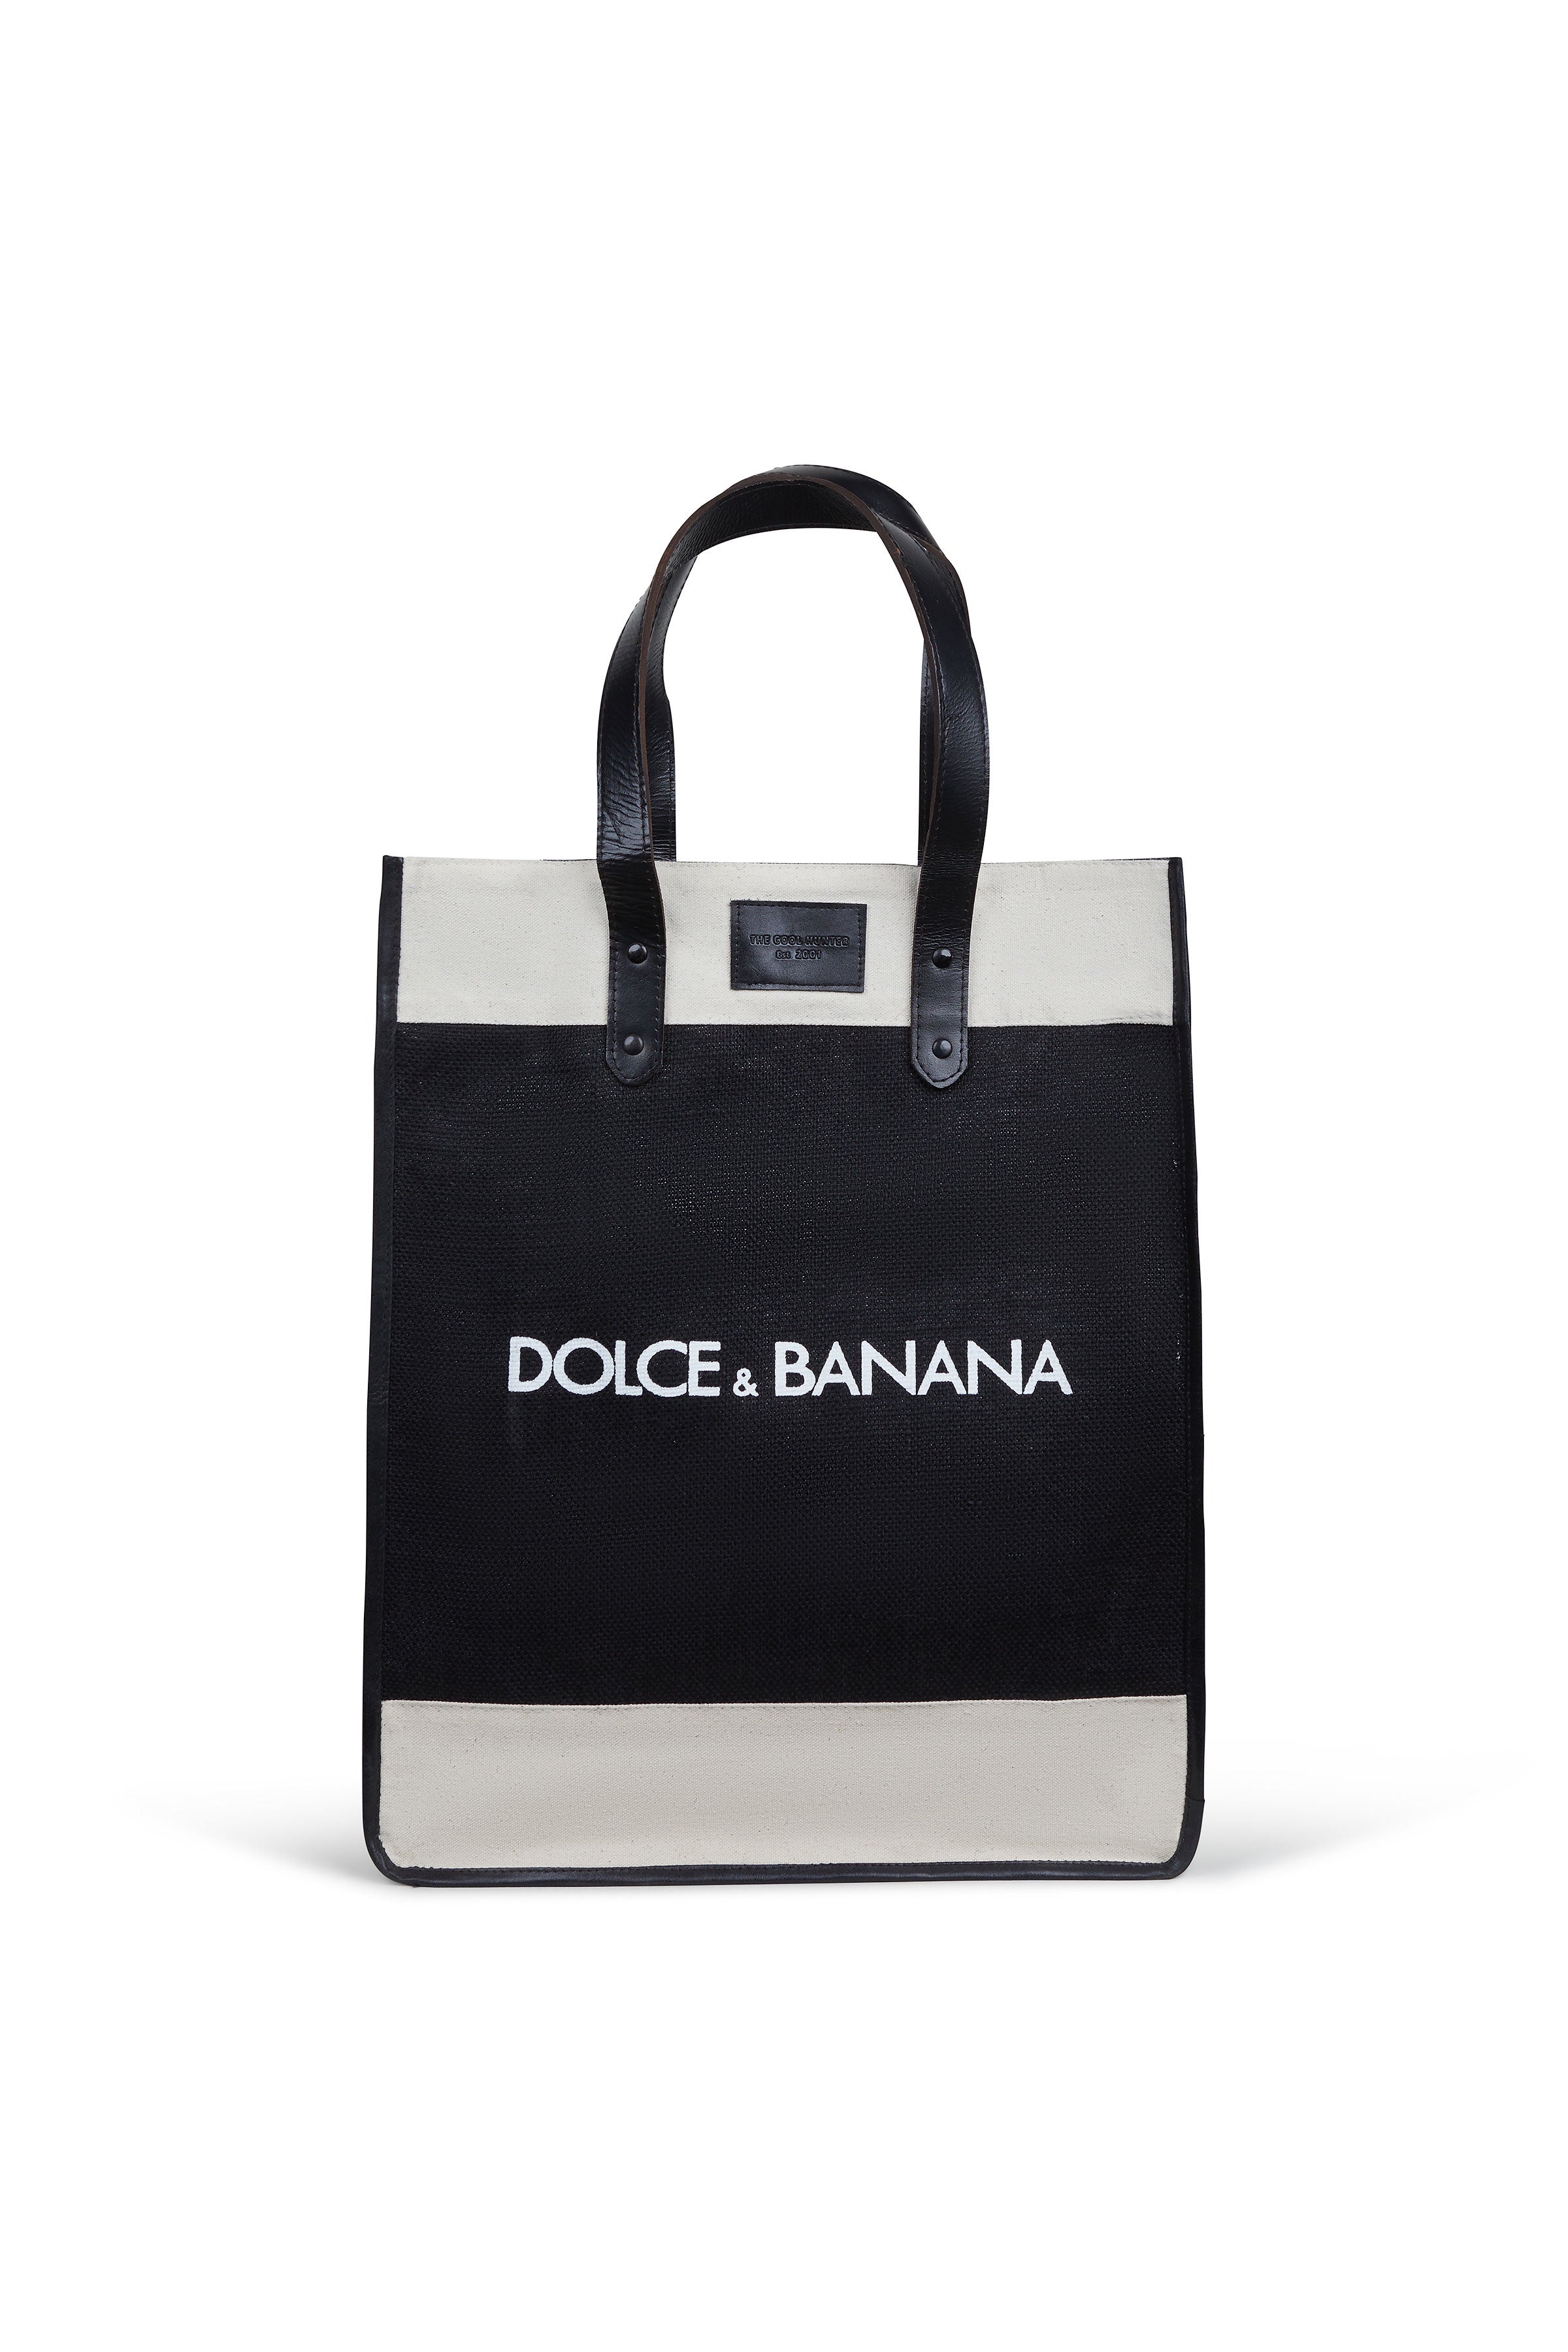 The Cool Hunter Market Bag Black Leather - Dolce & Banana - NEW